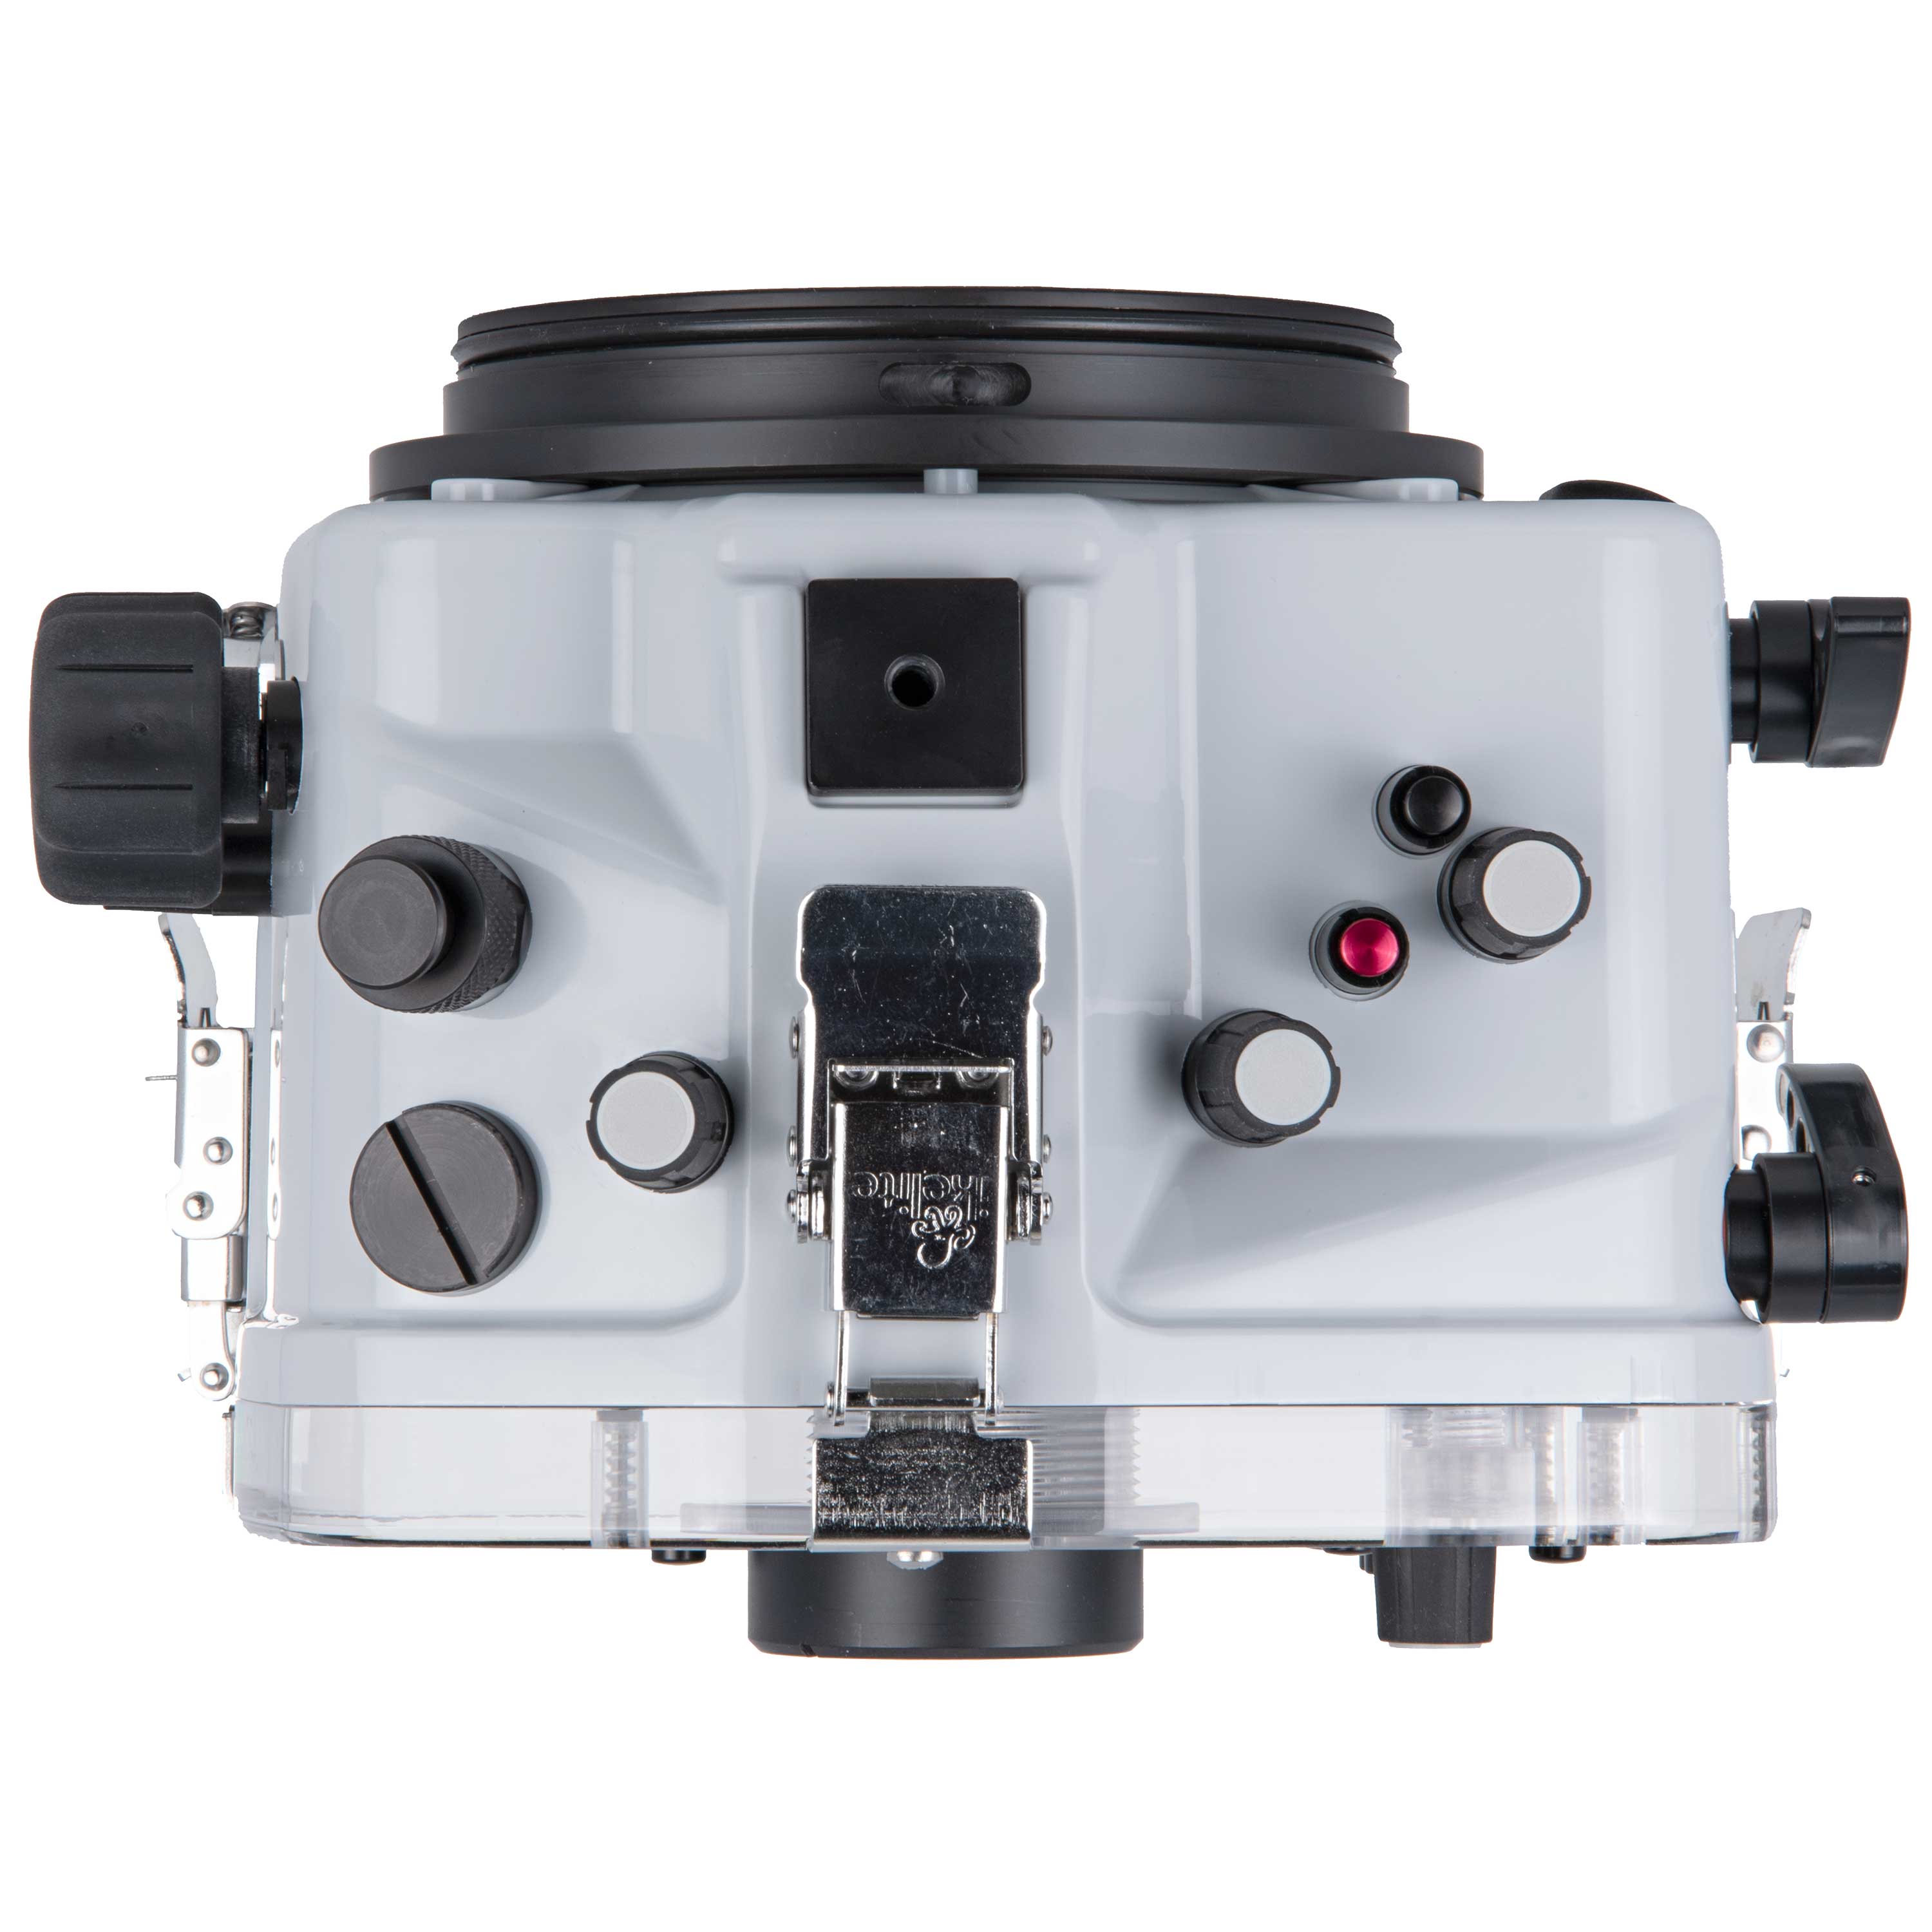 Ikelite 200DL Underwater Housing for Canon EOS RP Mirrorless Digital Camera